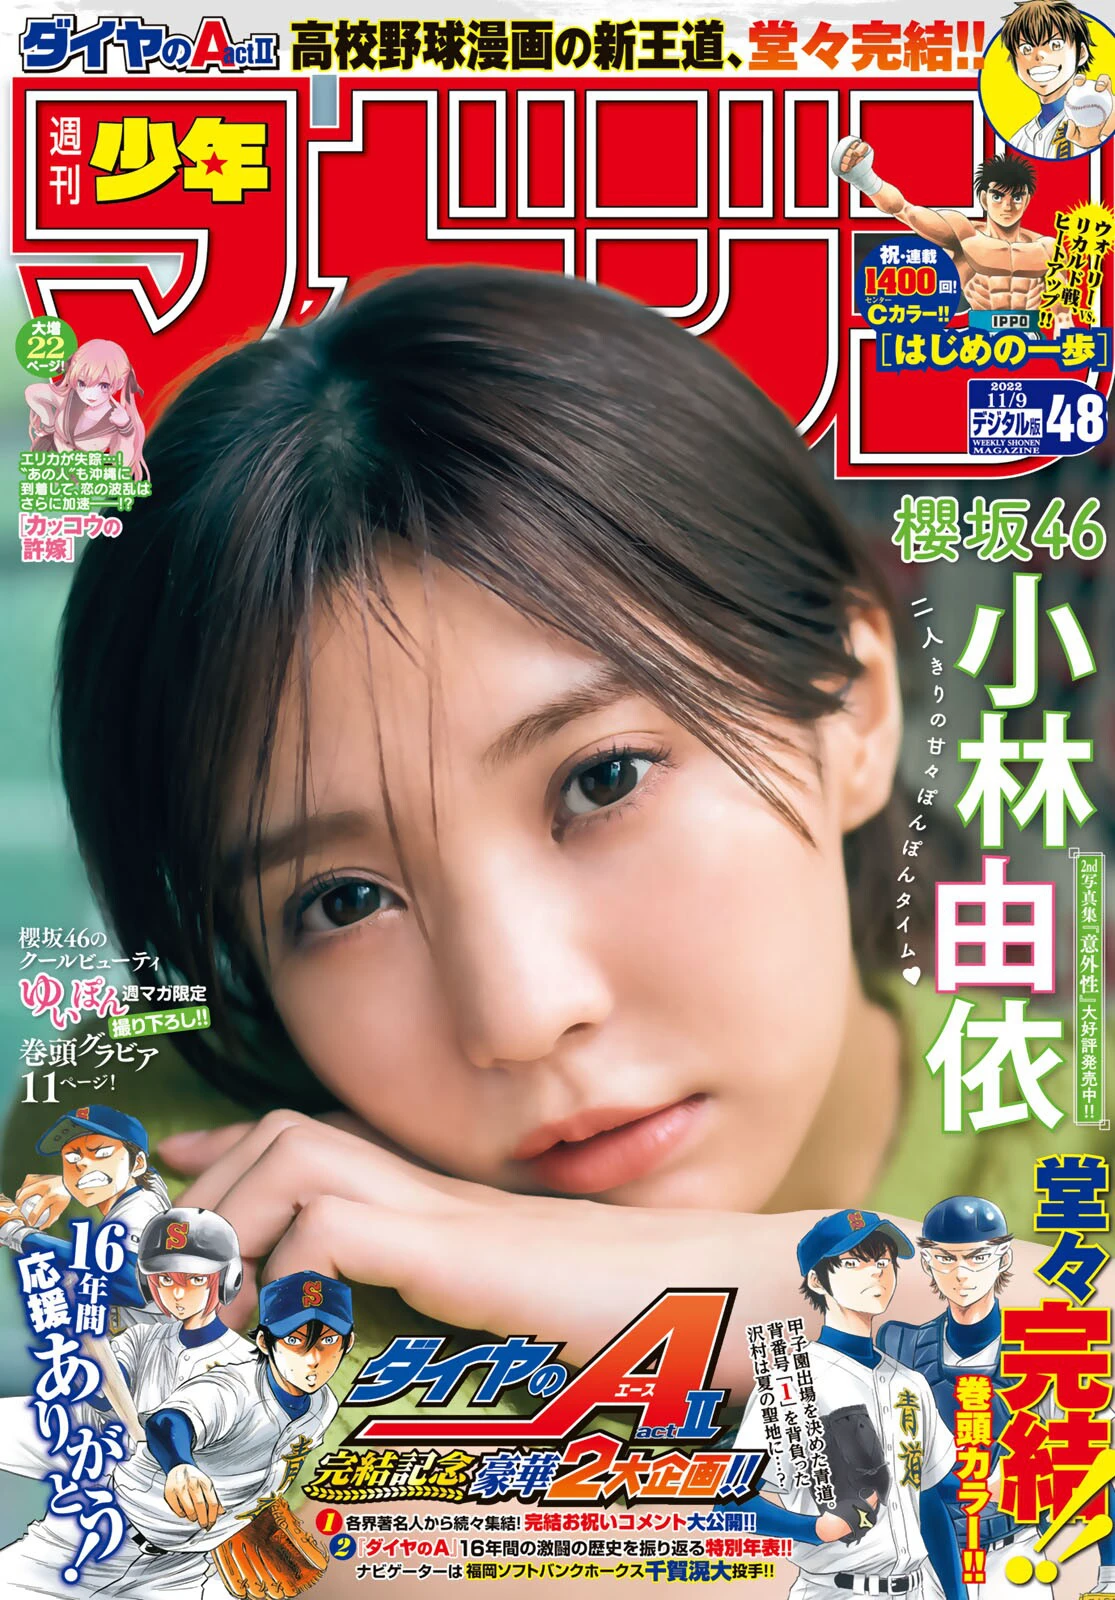 [Shonen Magazine] 週刊少年マガジン 2022.11.09 No.48 櫻坂46 小林由依